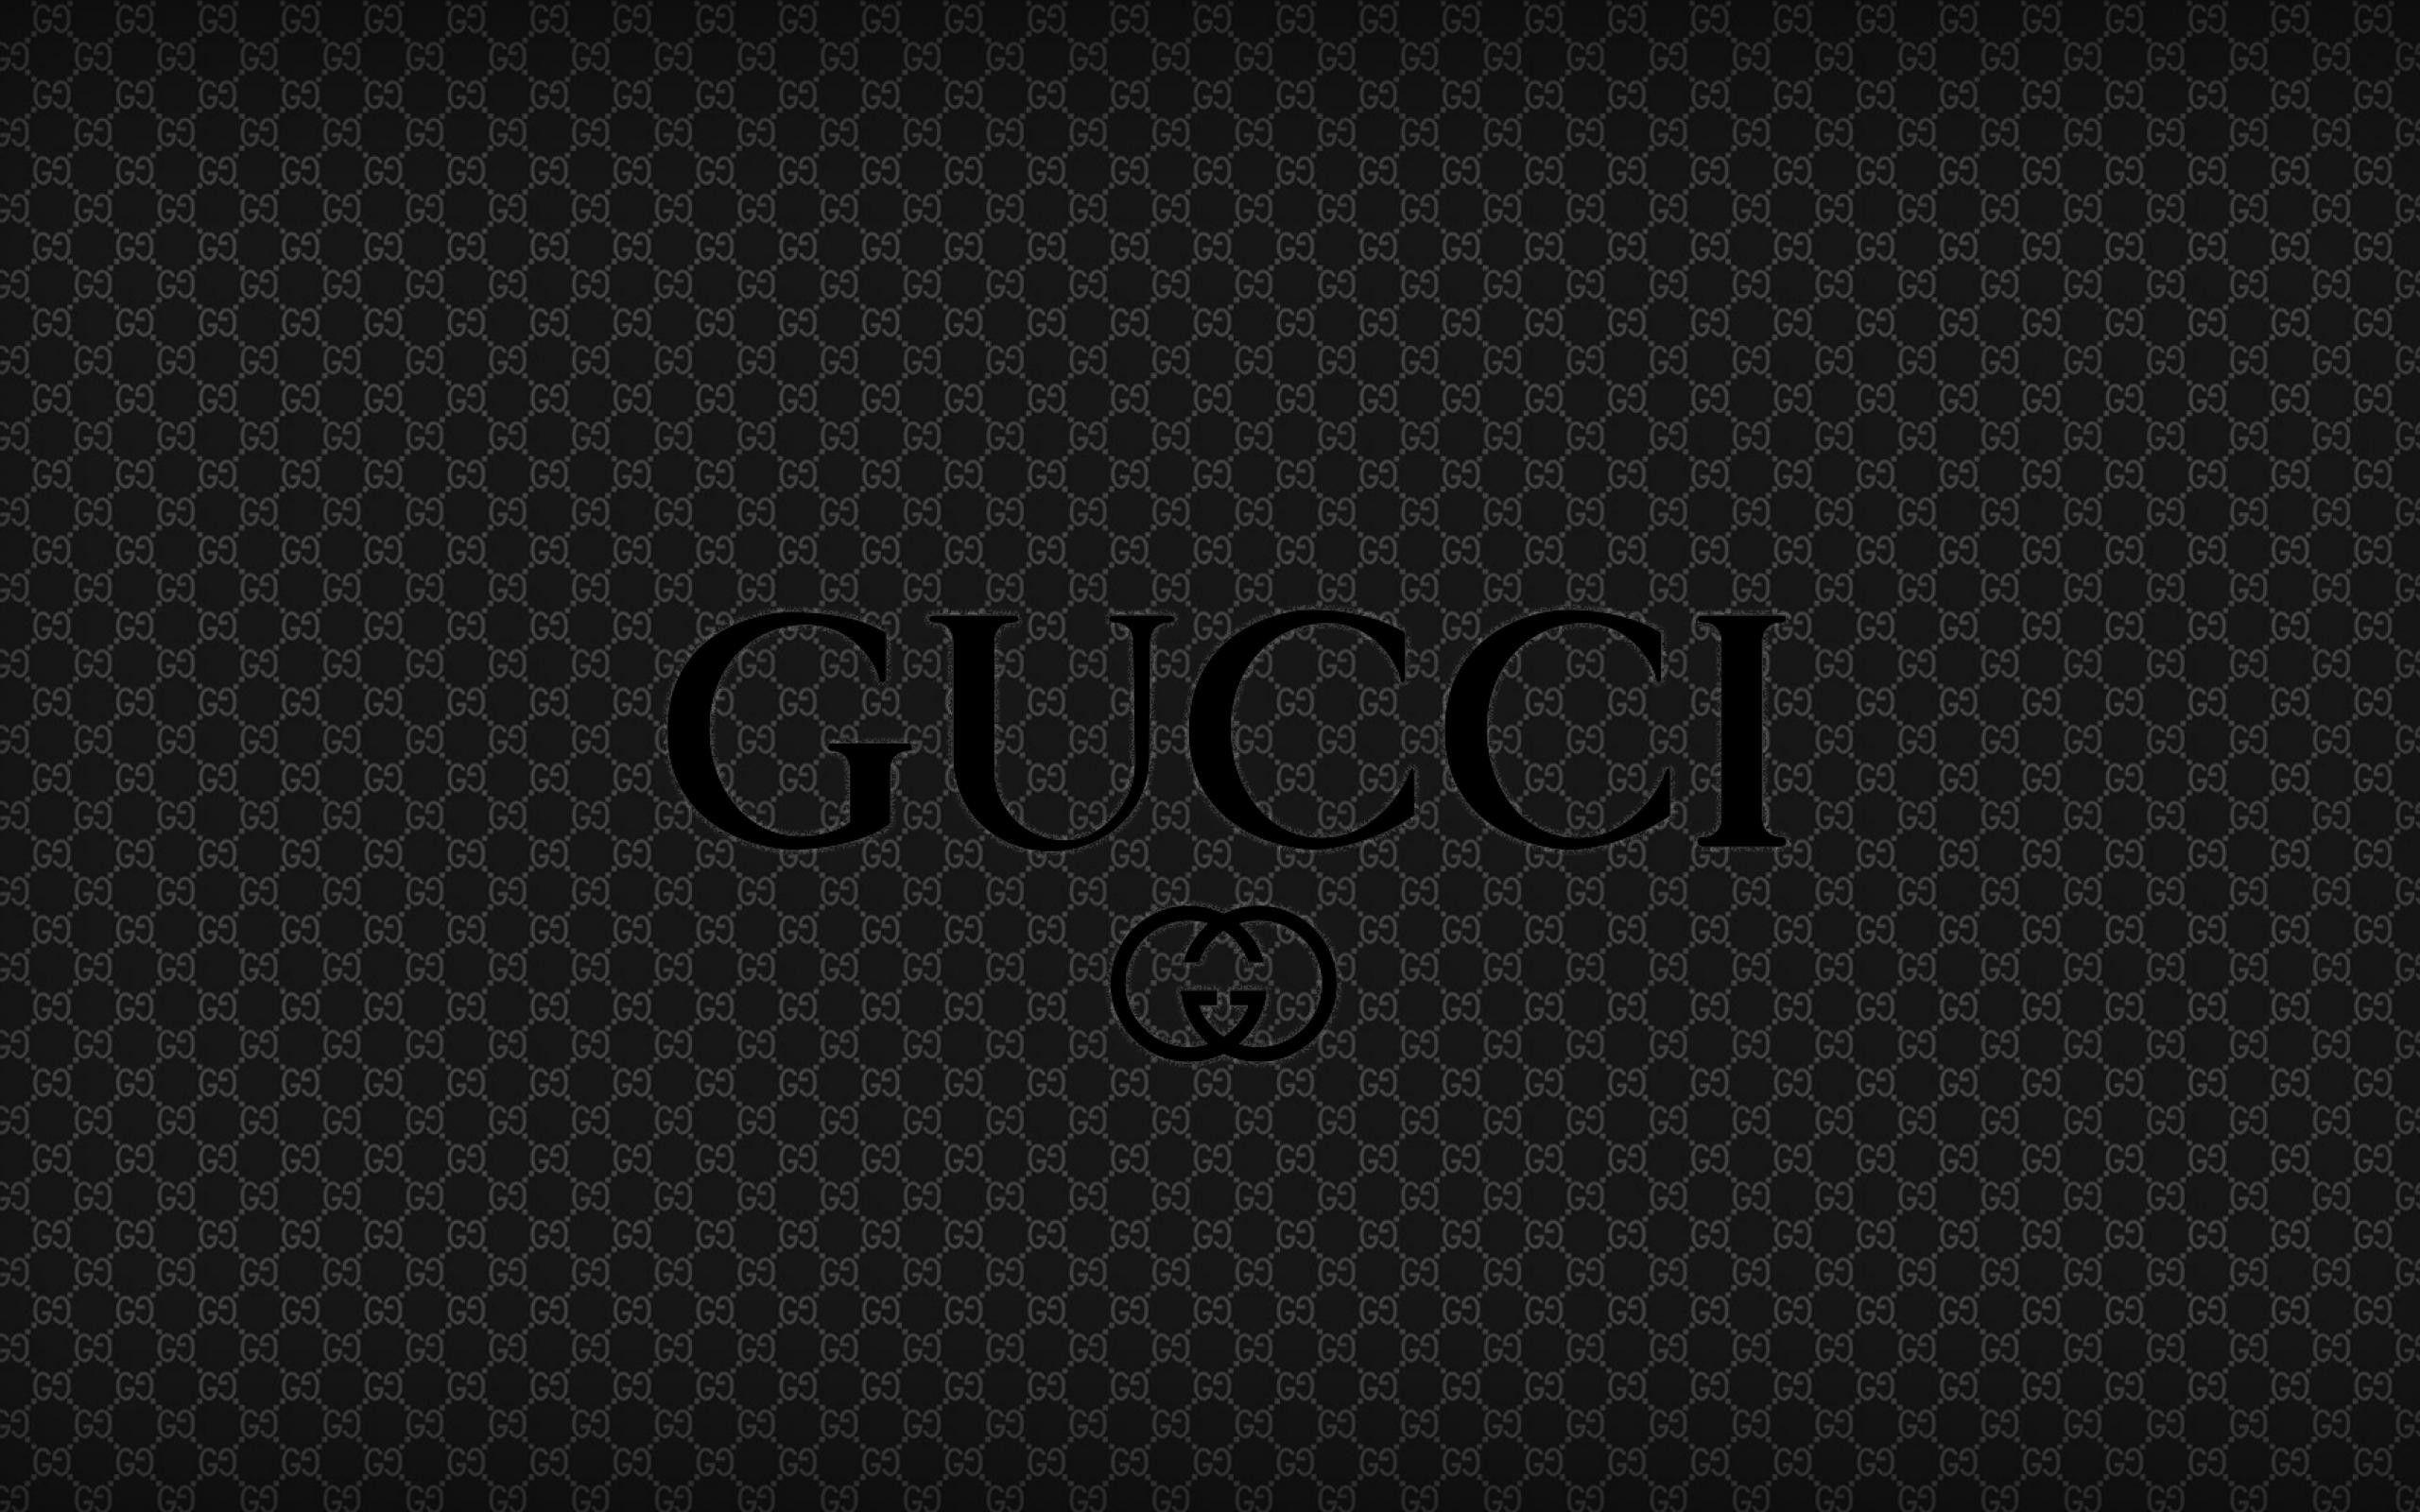 Gucci wallpaperDownload free amazing background for desktop